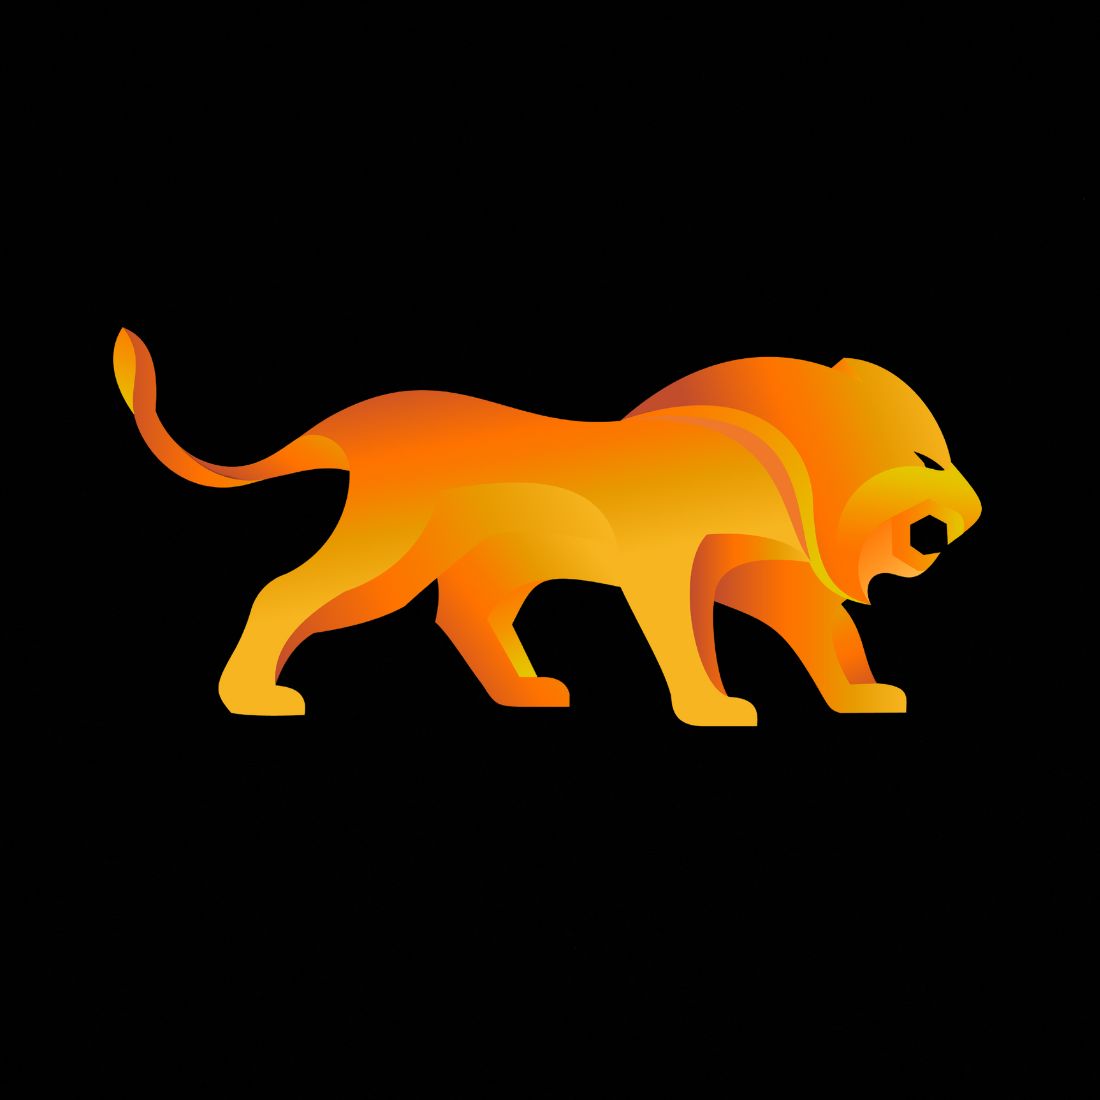 Abstract lion 3D Logo Design Logo Vector illustration Artwork preview image.